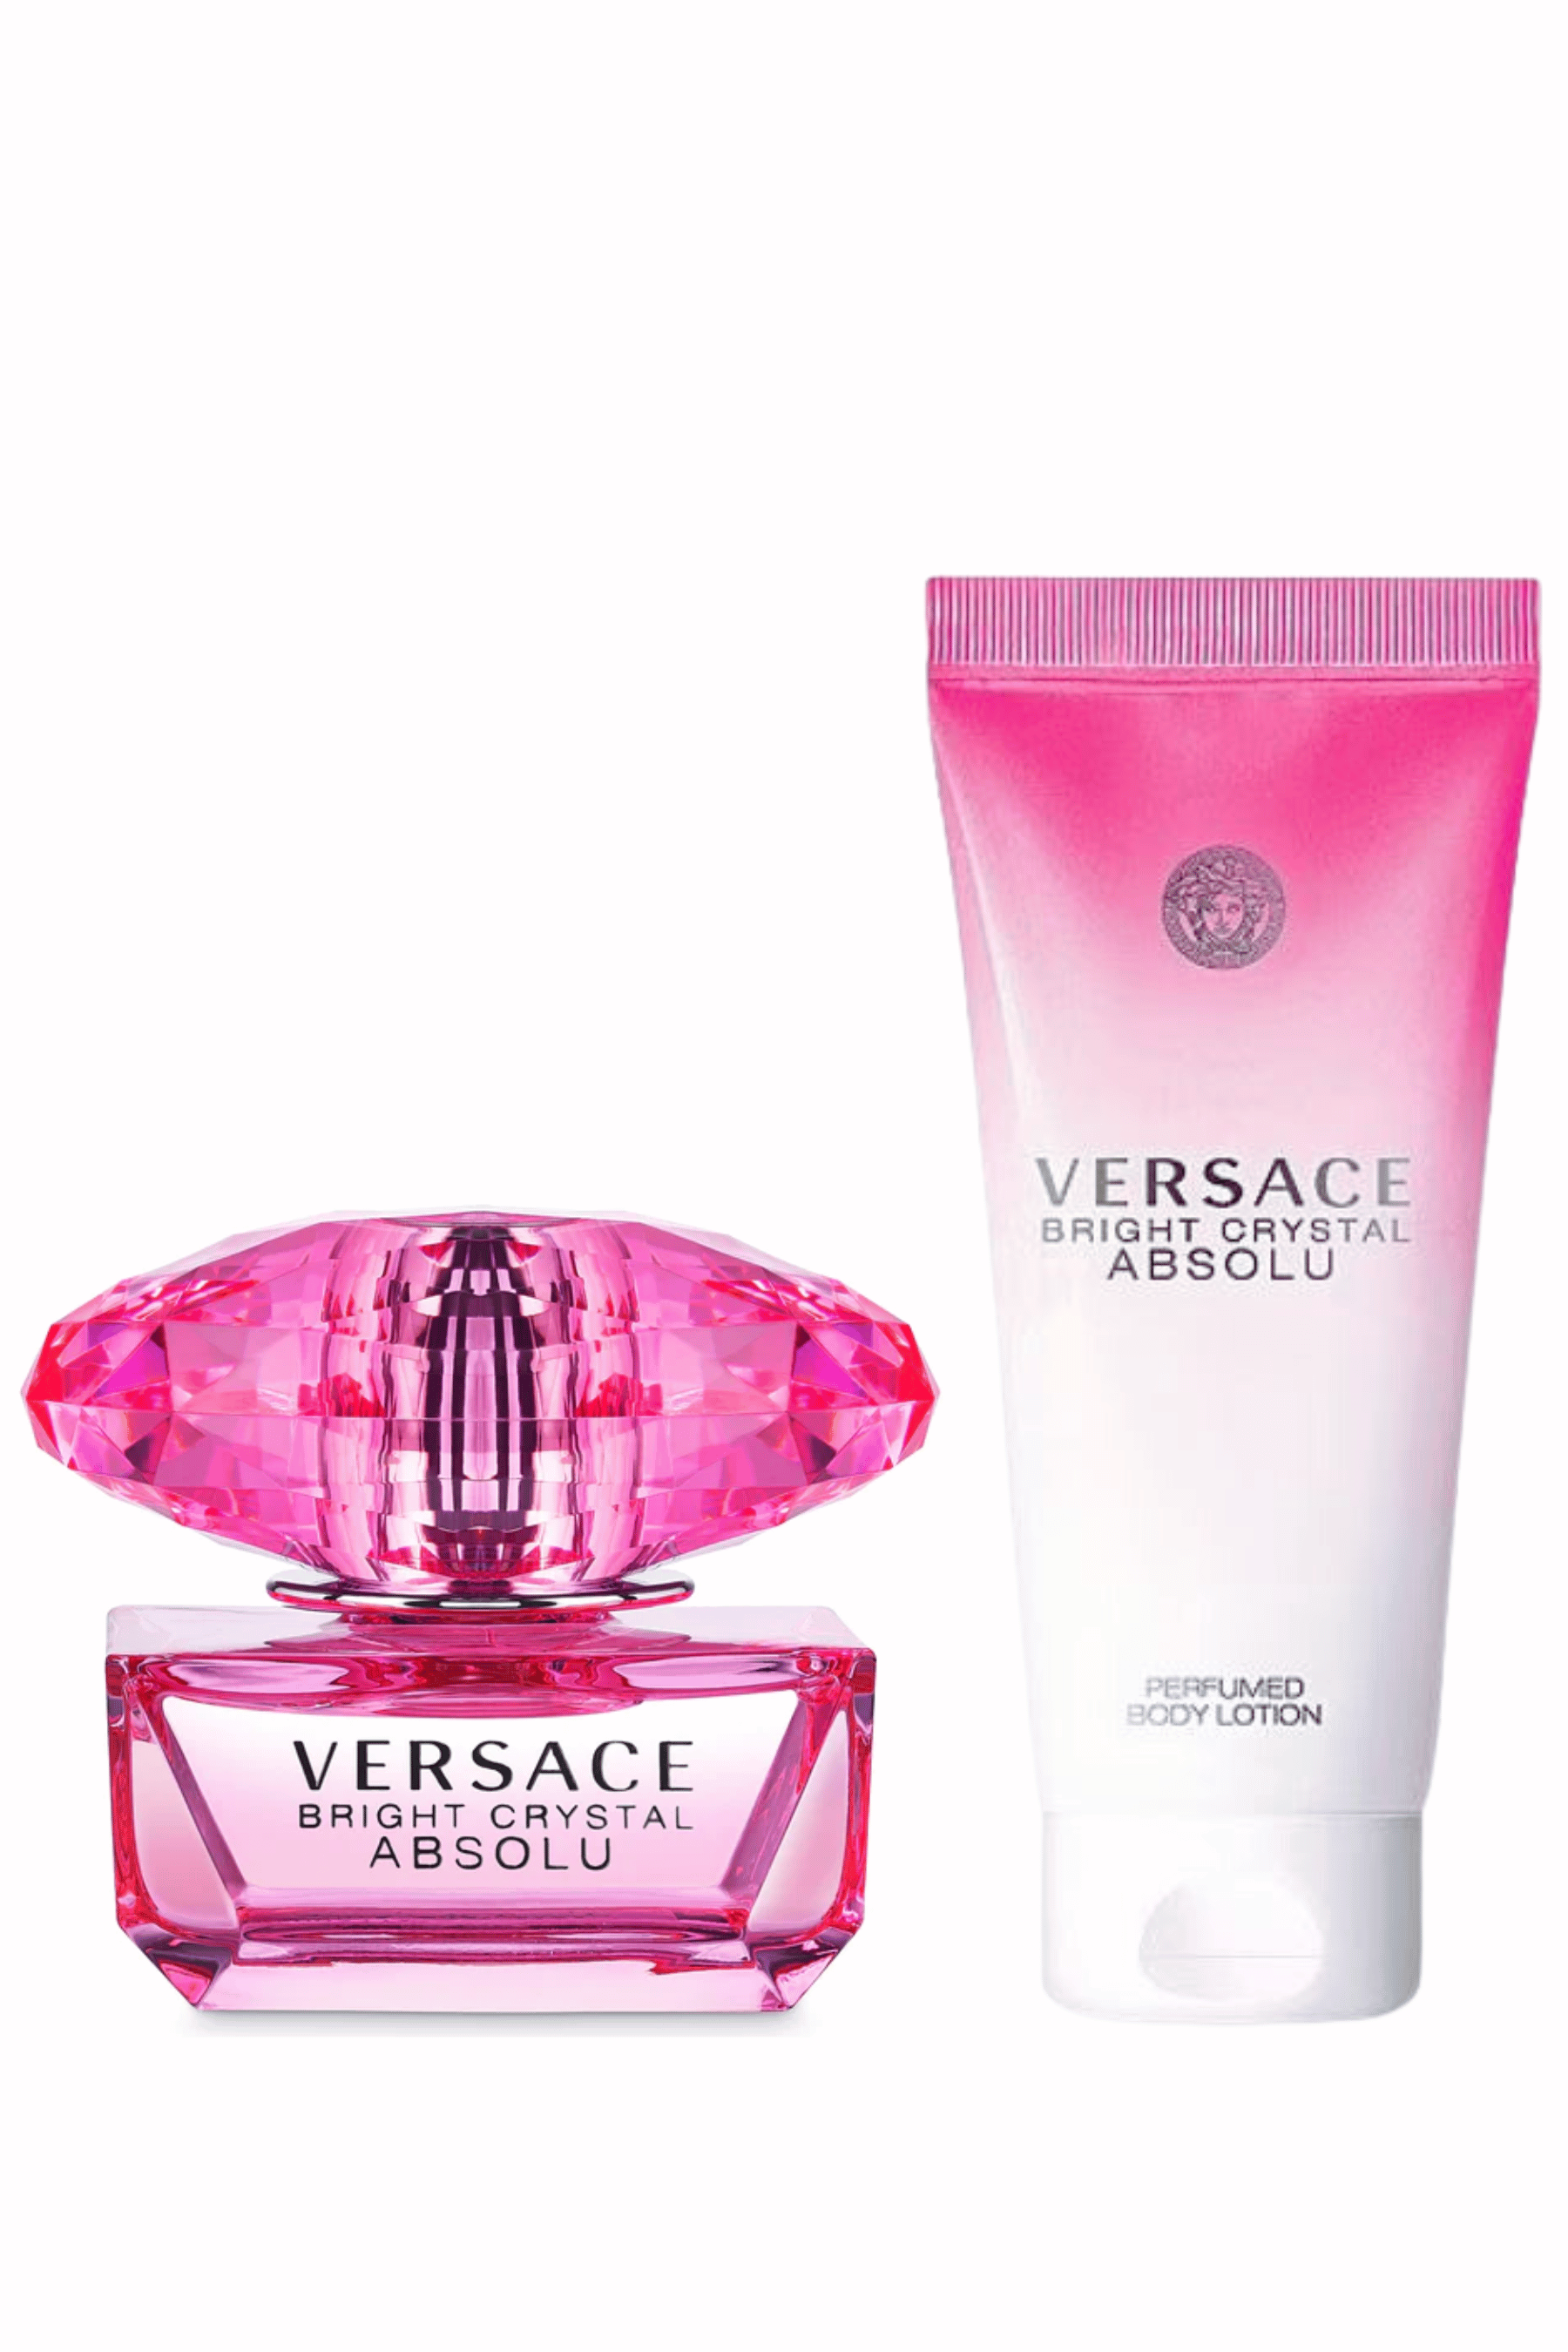 Bright Crystal by Versace 1.7 oz 50 ml EDT Spray Perfume for Women New in  Box | eBay